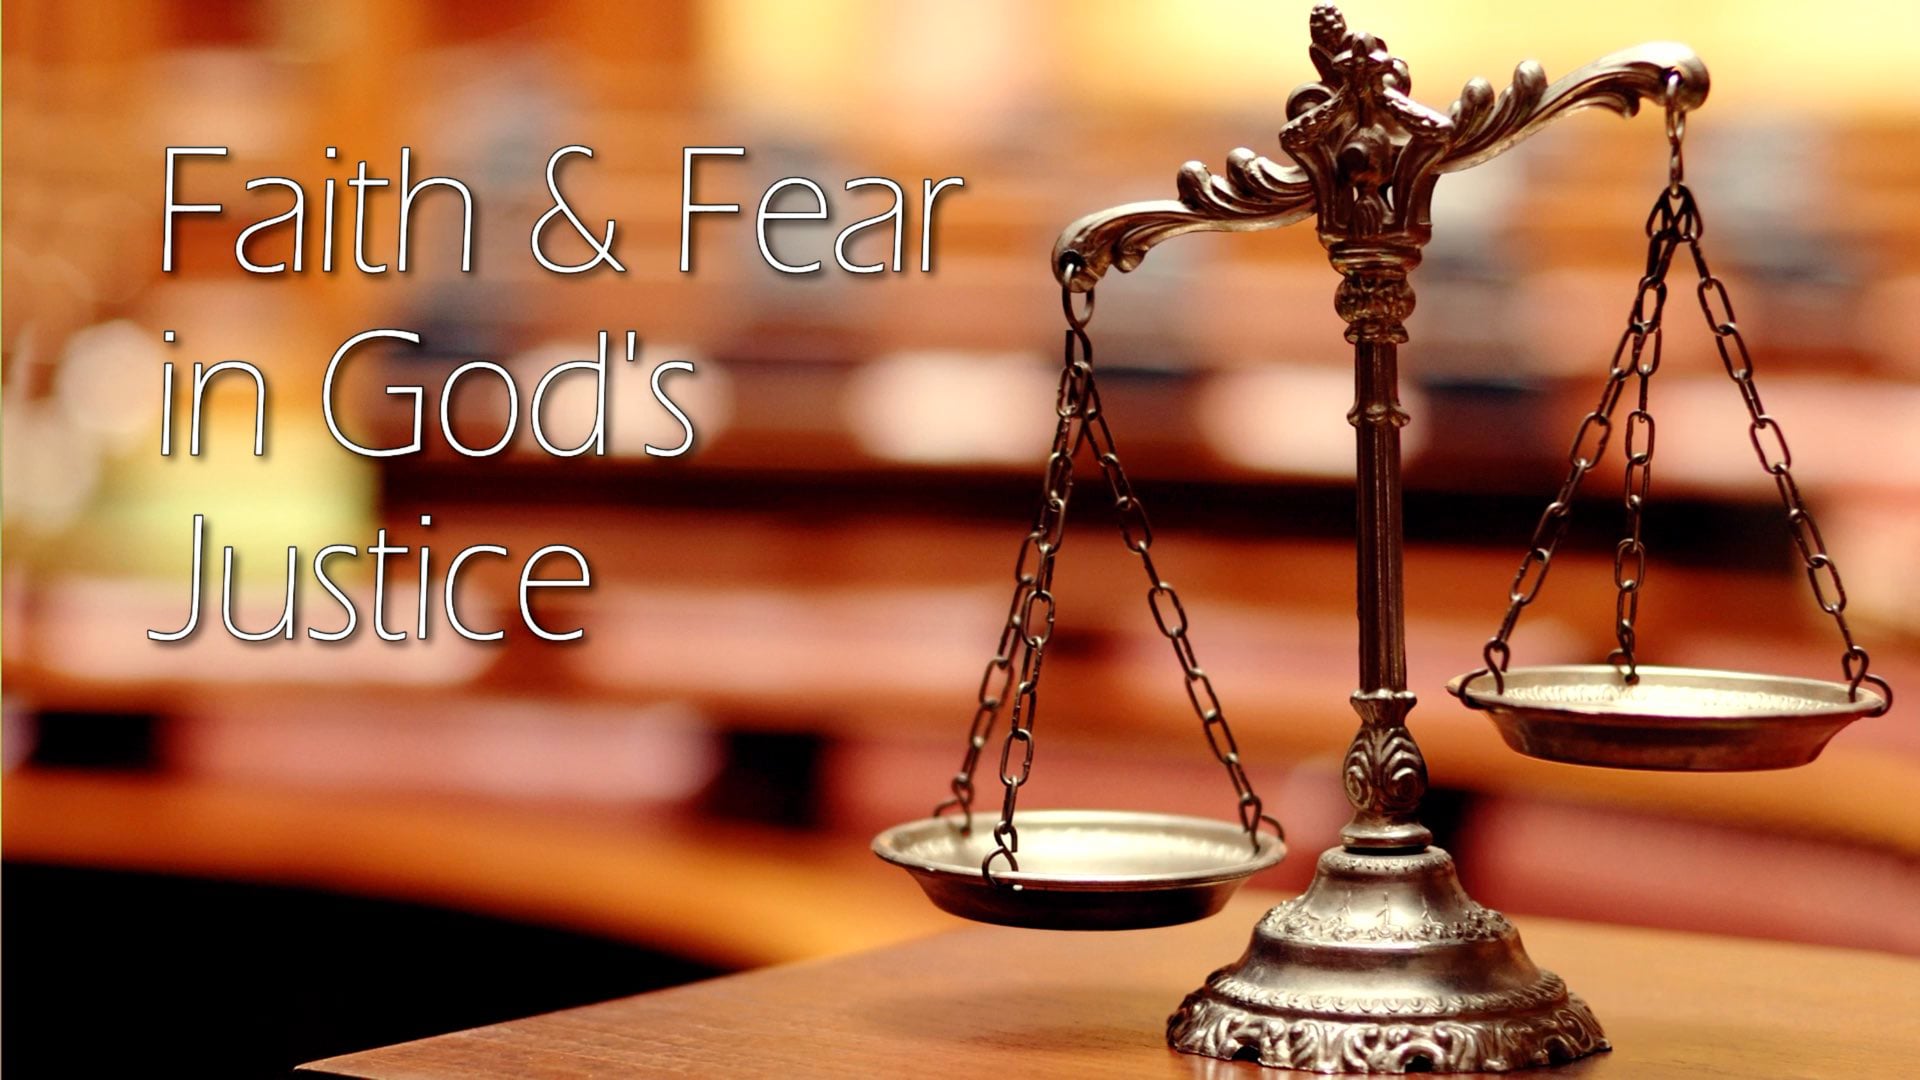 Dec 26, 2021 Faith & Fear in God's Justice